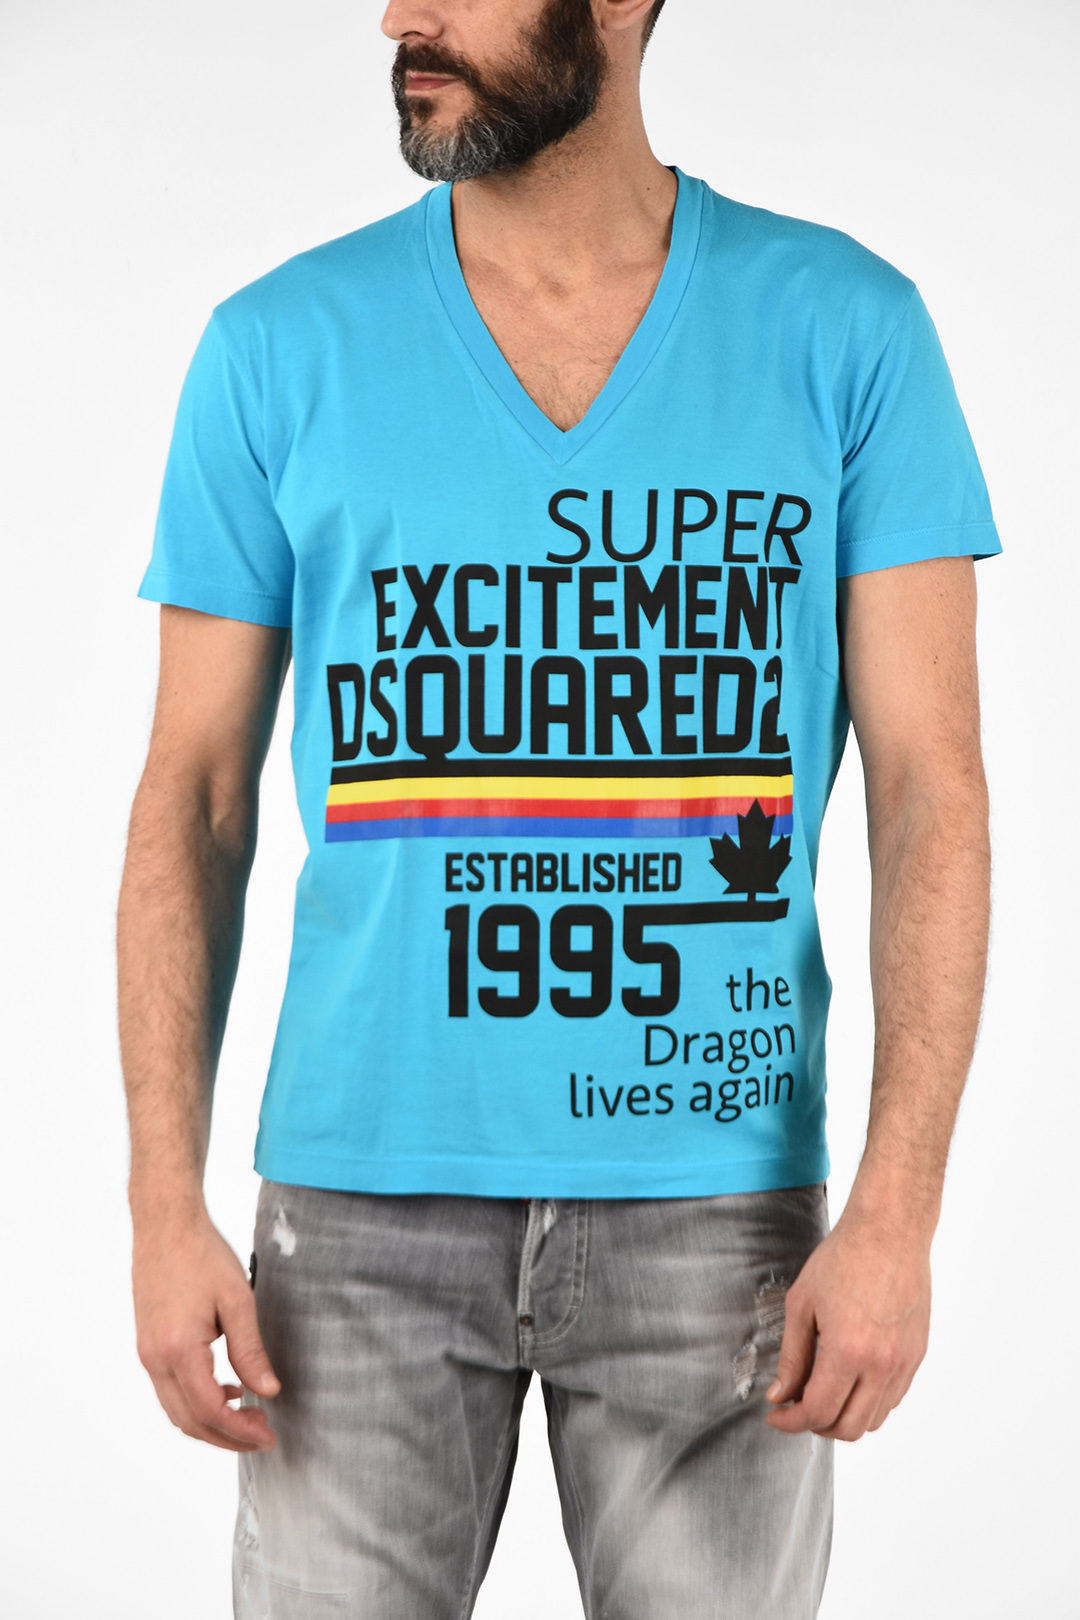 Schijn Ongedaan maken Schande Dsquared2 V-Neck Print COOL FIT T-shirt men - Glamood Outlet